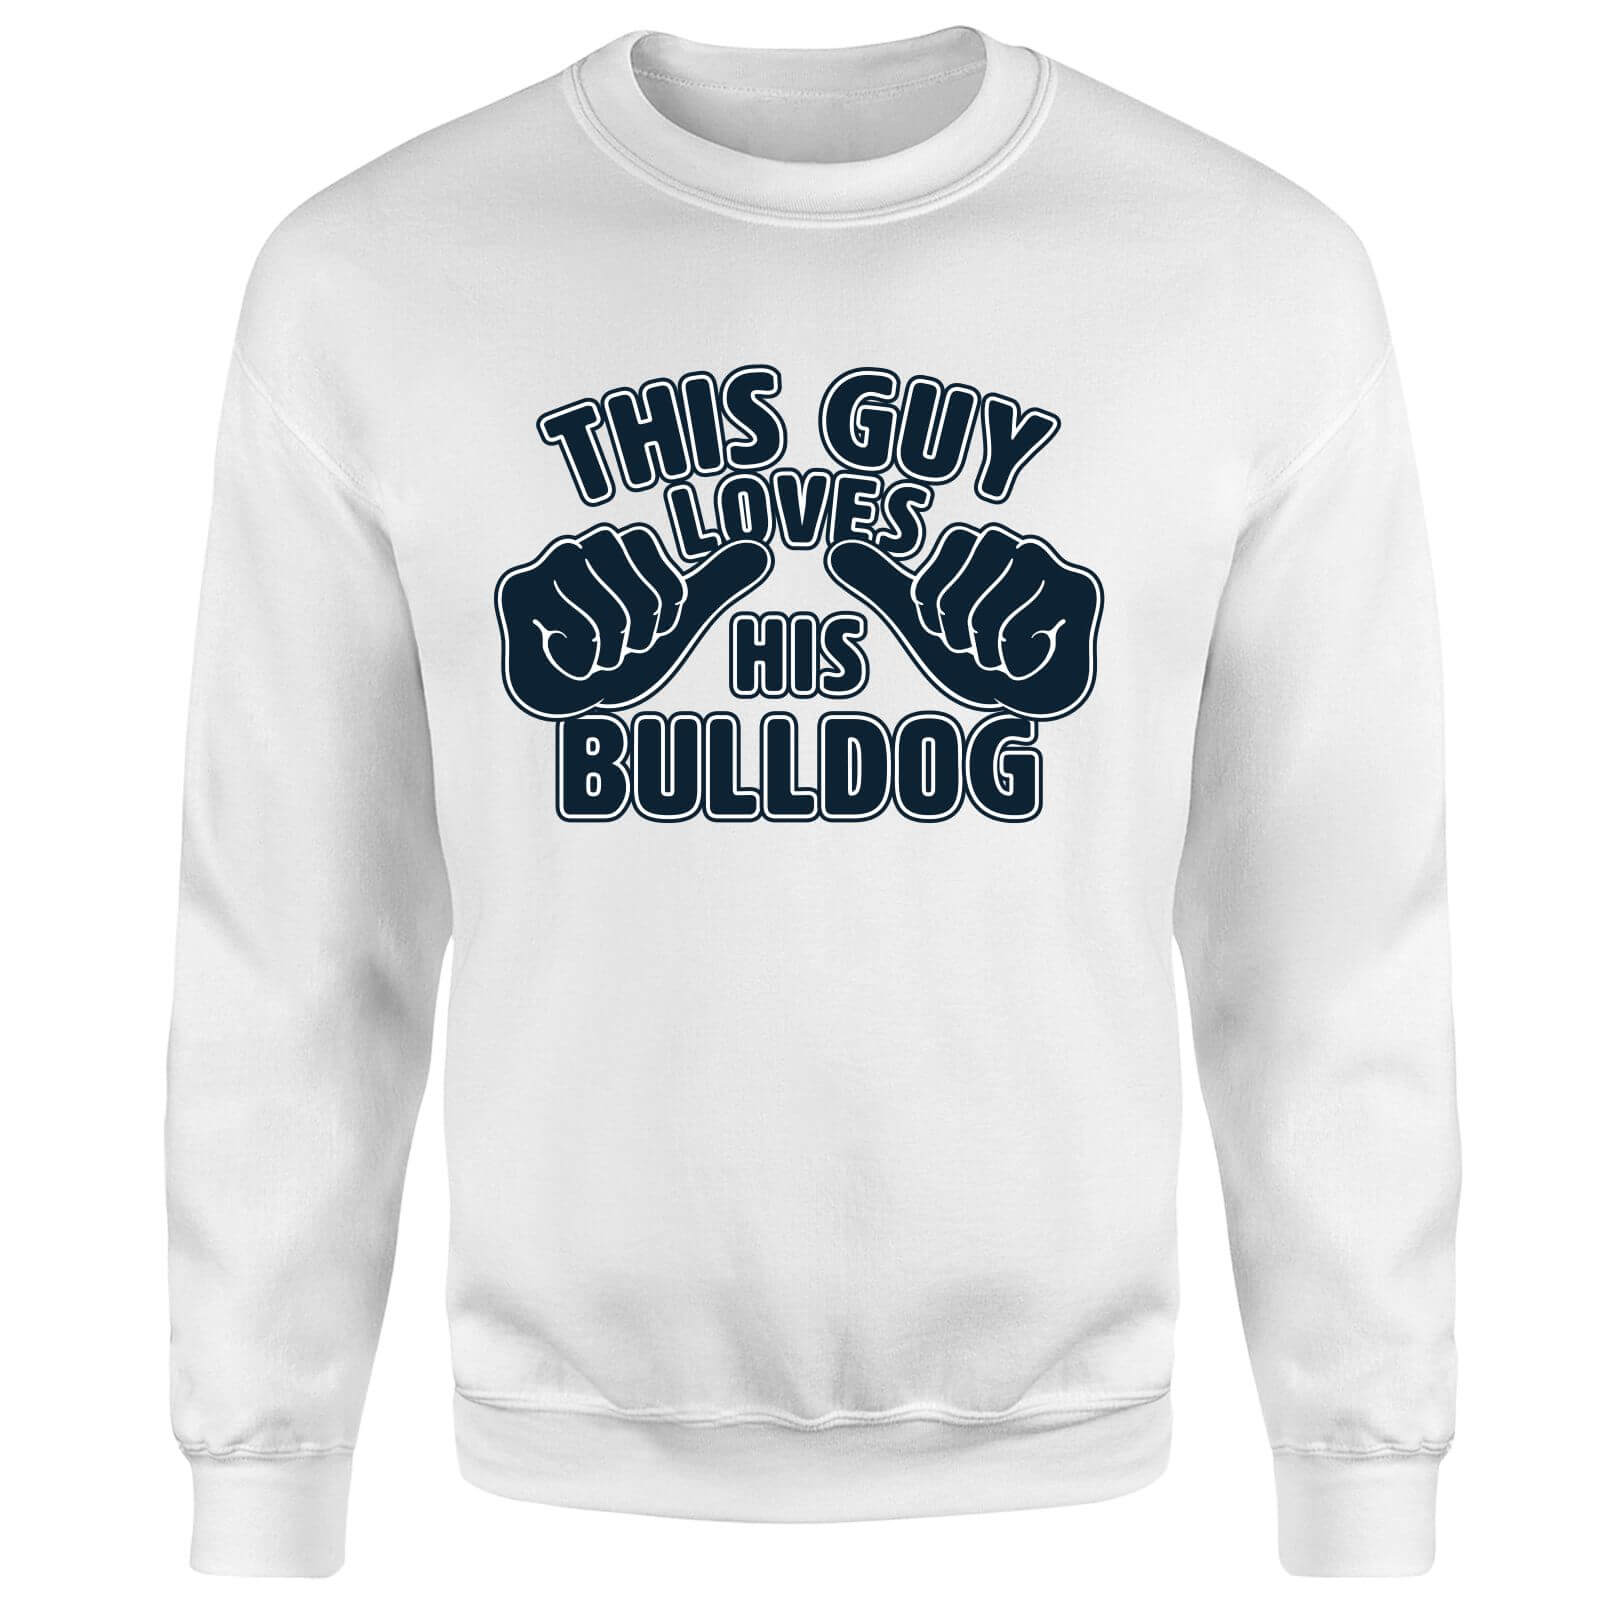 This Guy Loves His Bulldog Sweatshirt - White - XXL - White